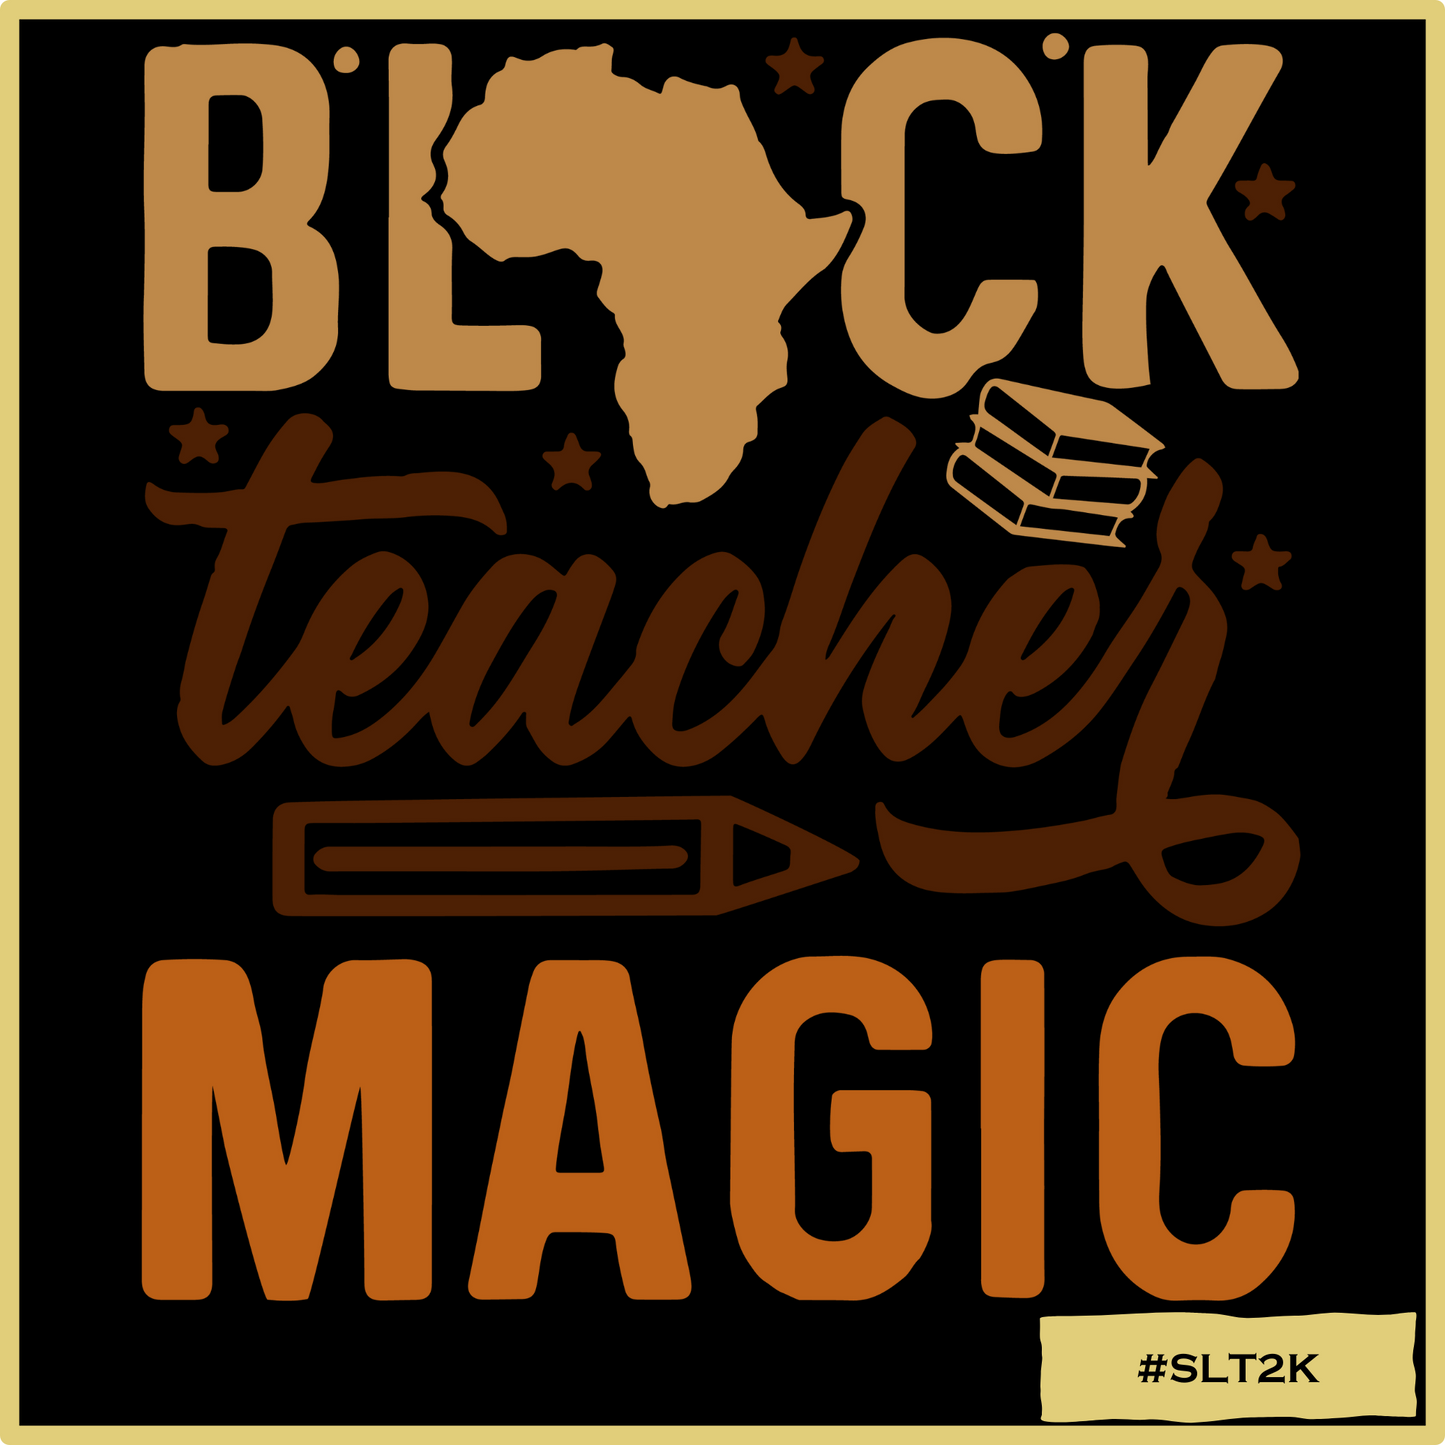 Black Teacher Magic